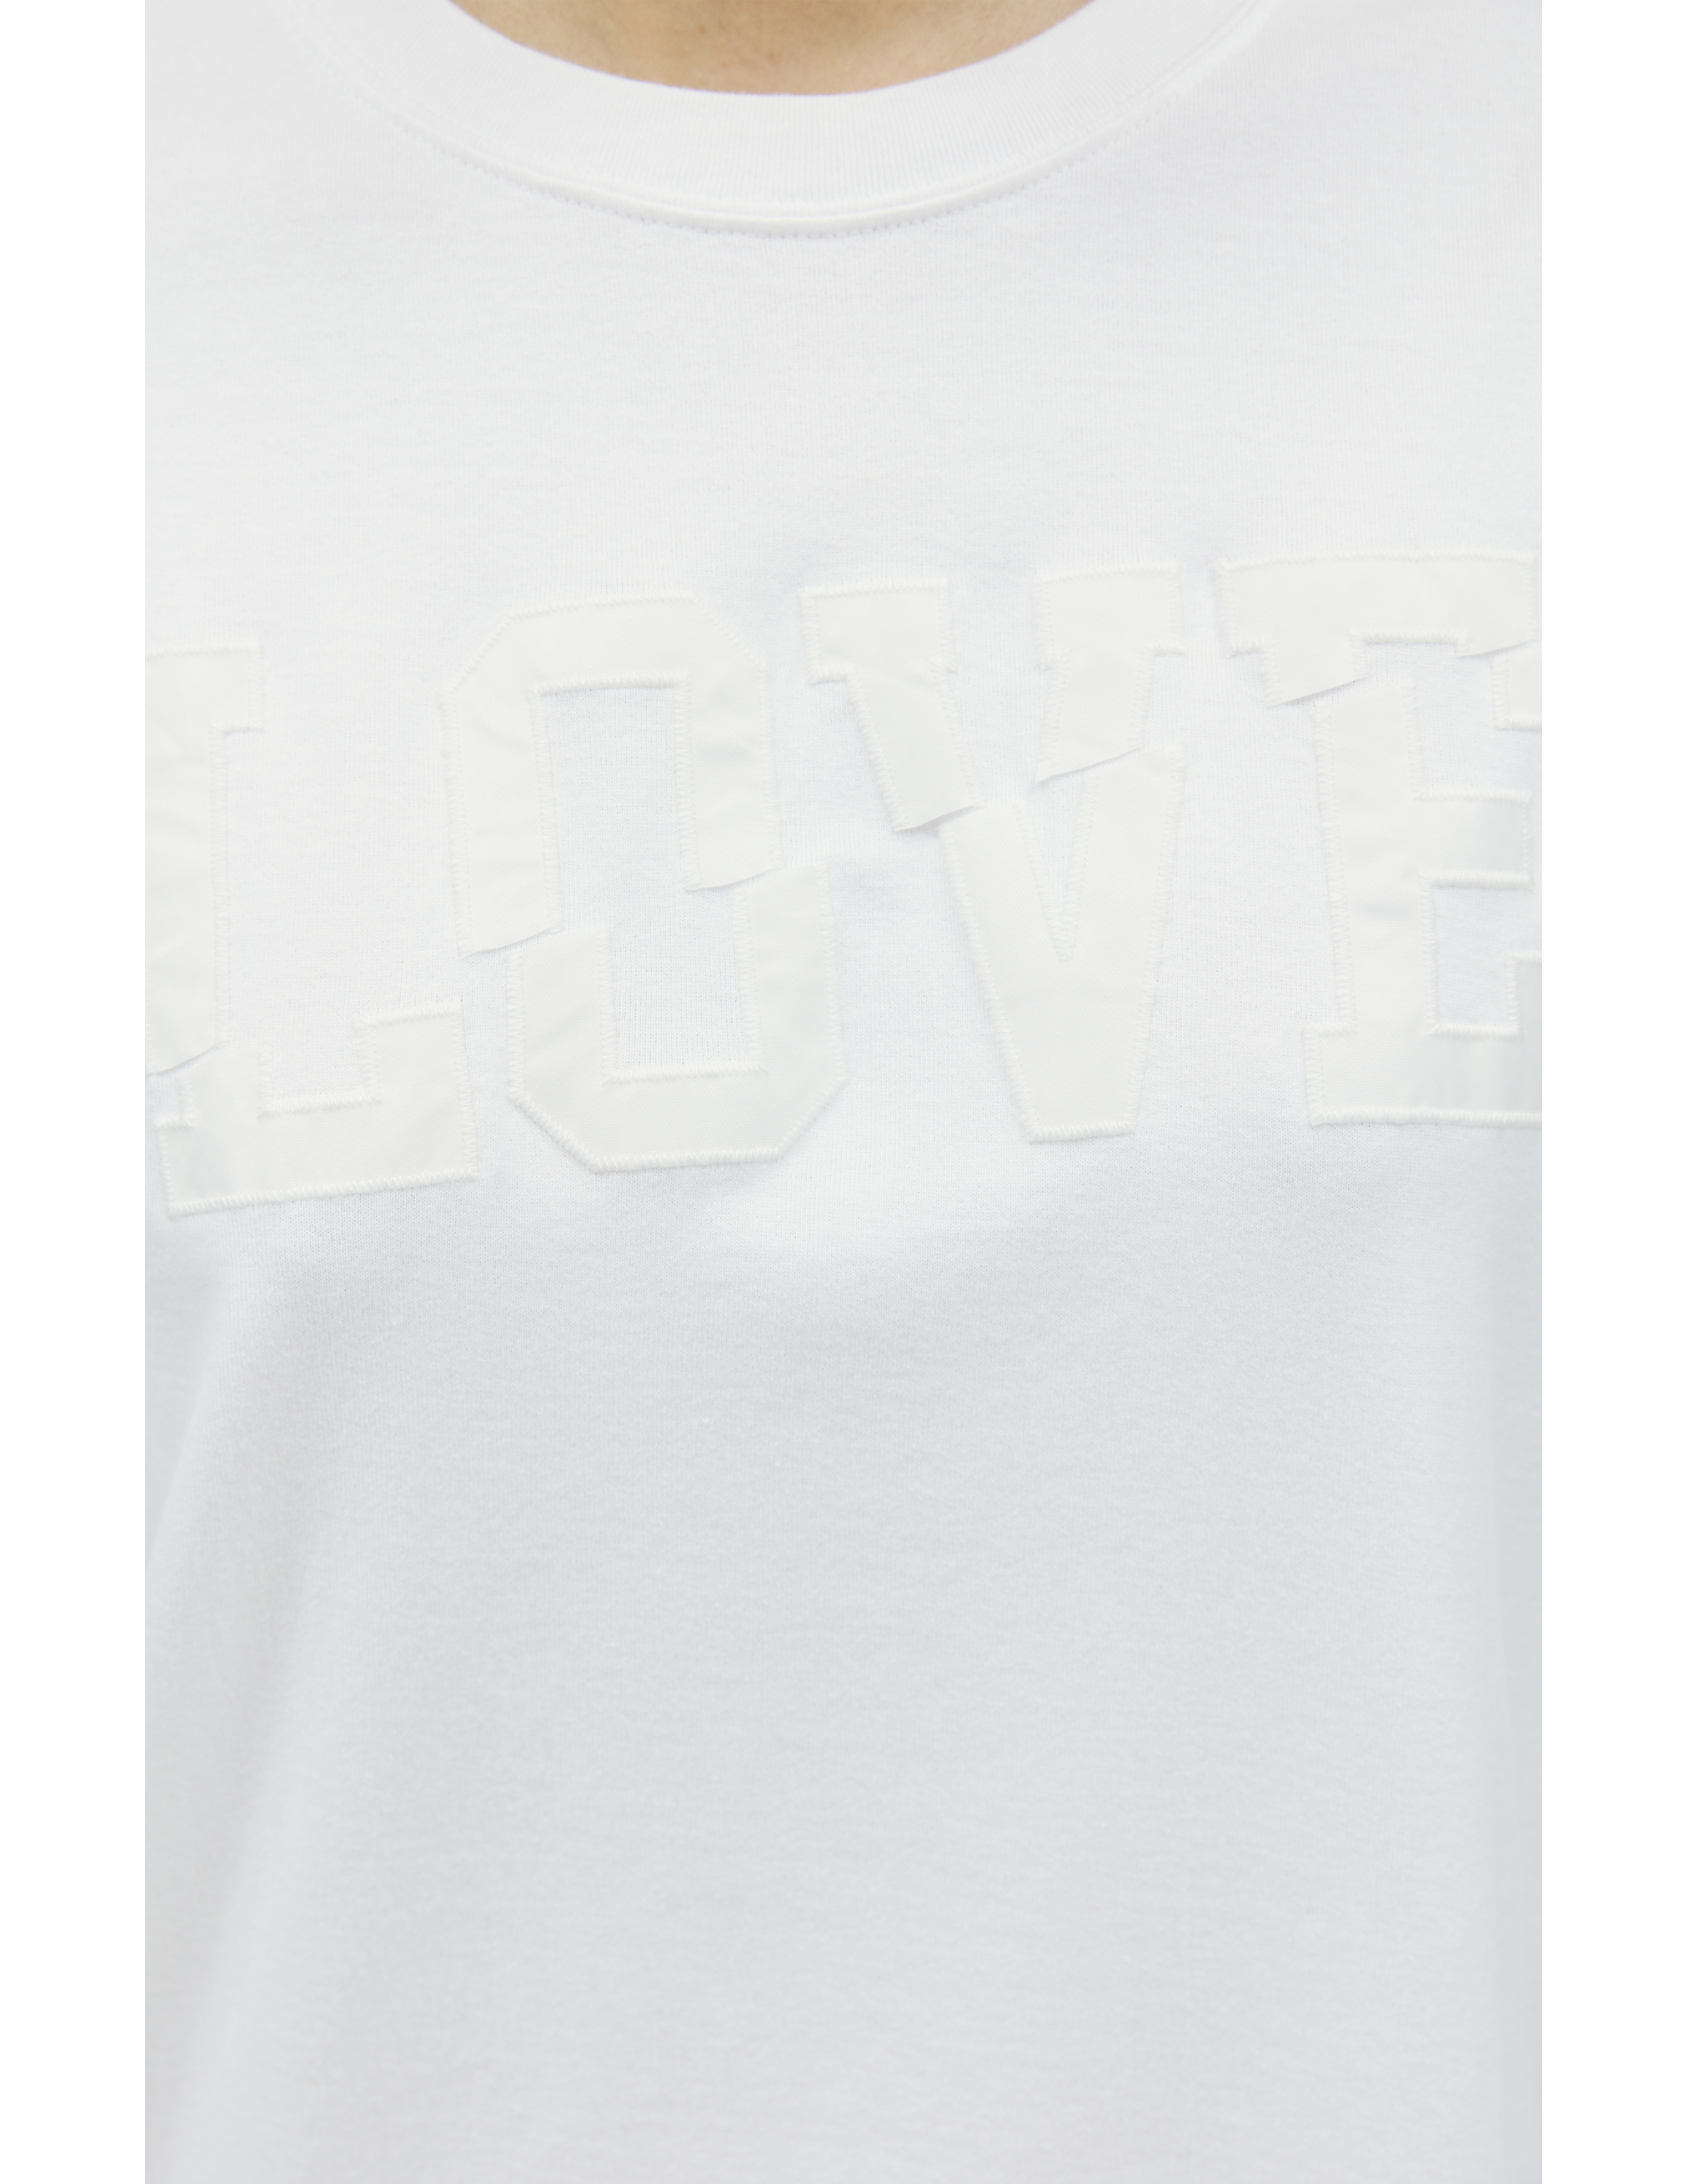 Оверсайз футболка с нашивкой Love Undercover UC1C2803/WHITE, размер 2;3 UC1C2803/WHITE - фото 4